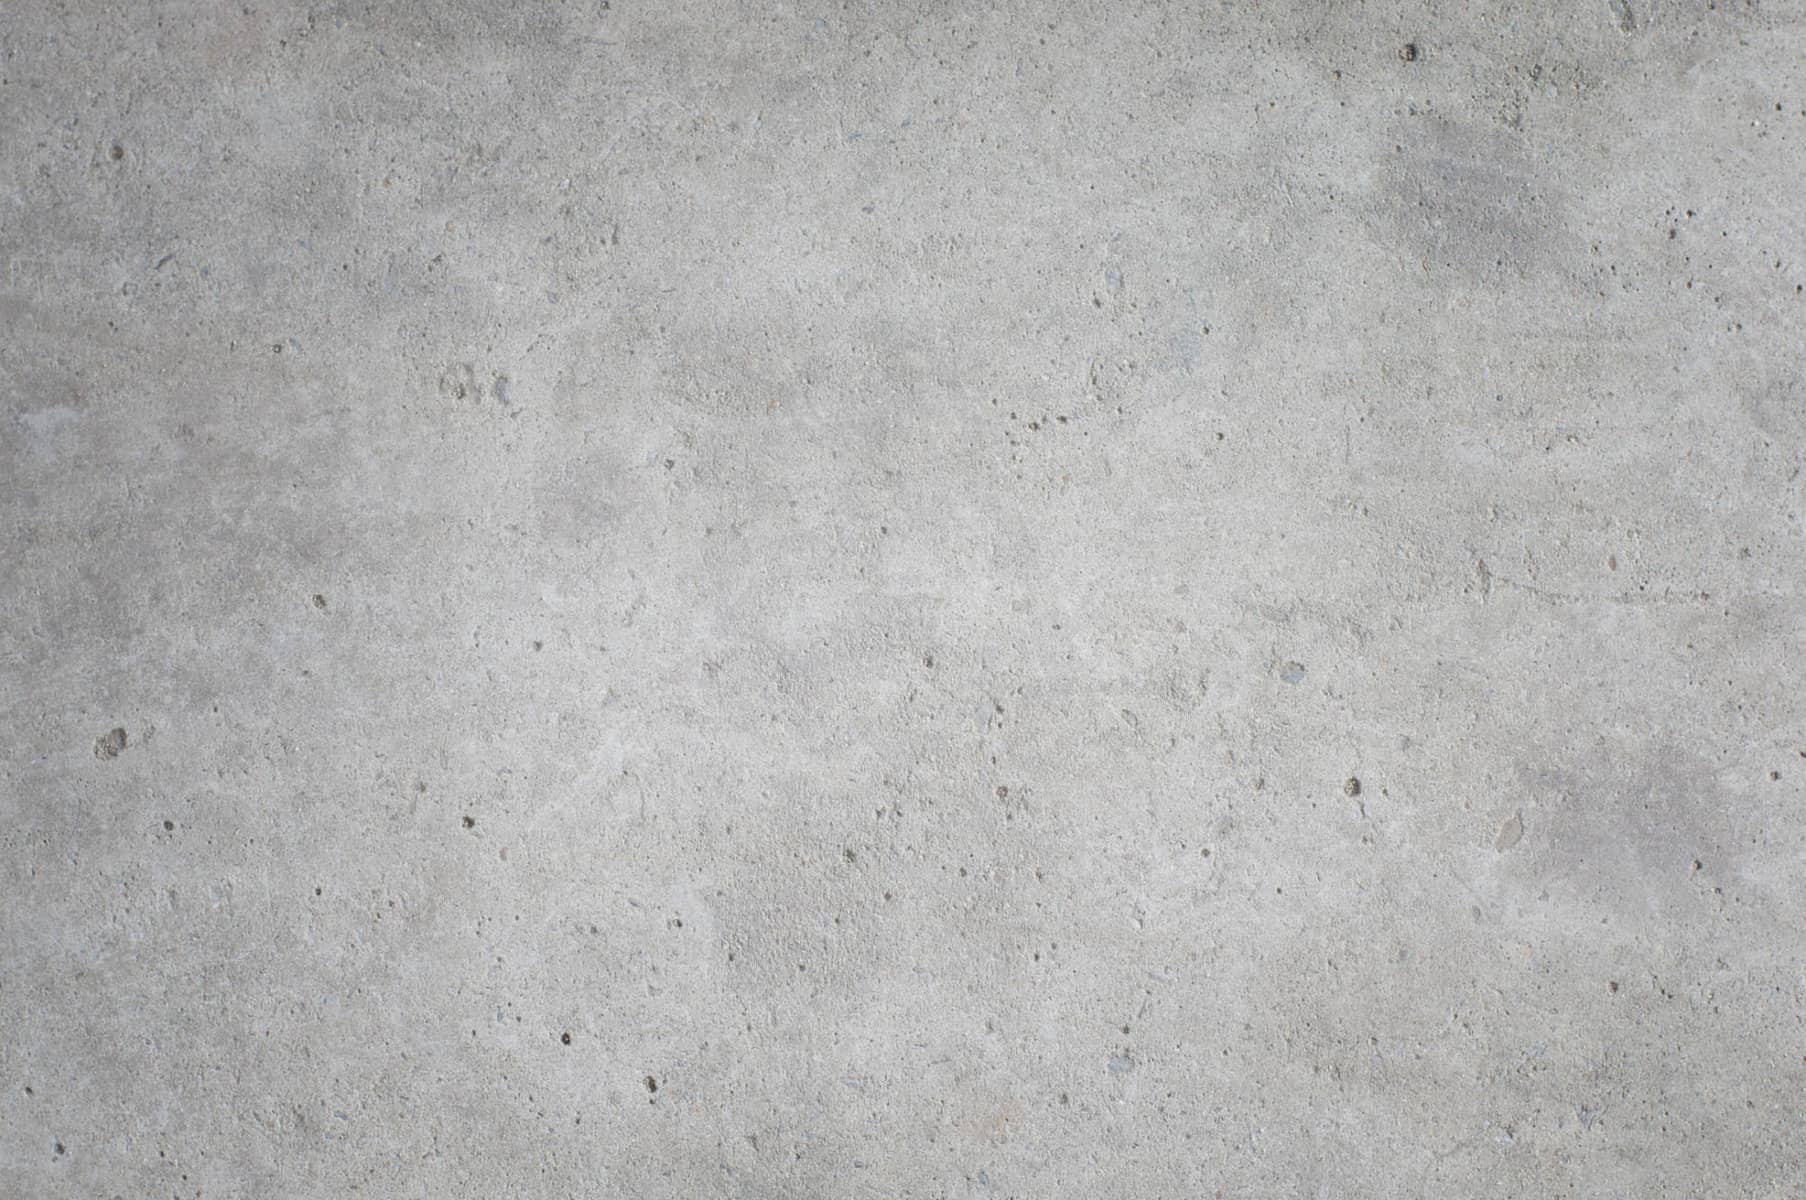 Cement floor texture, concrete floor texture use for